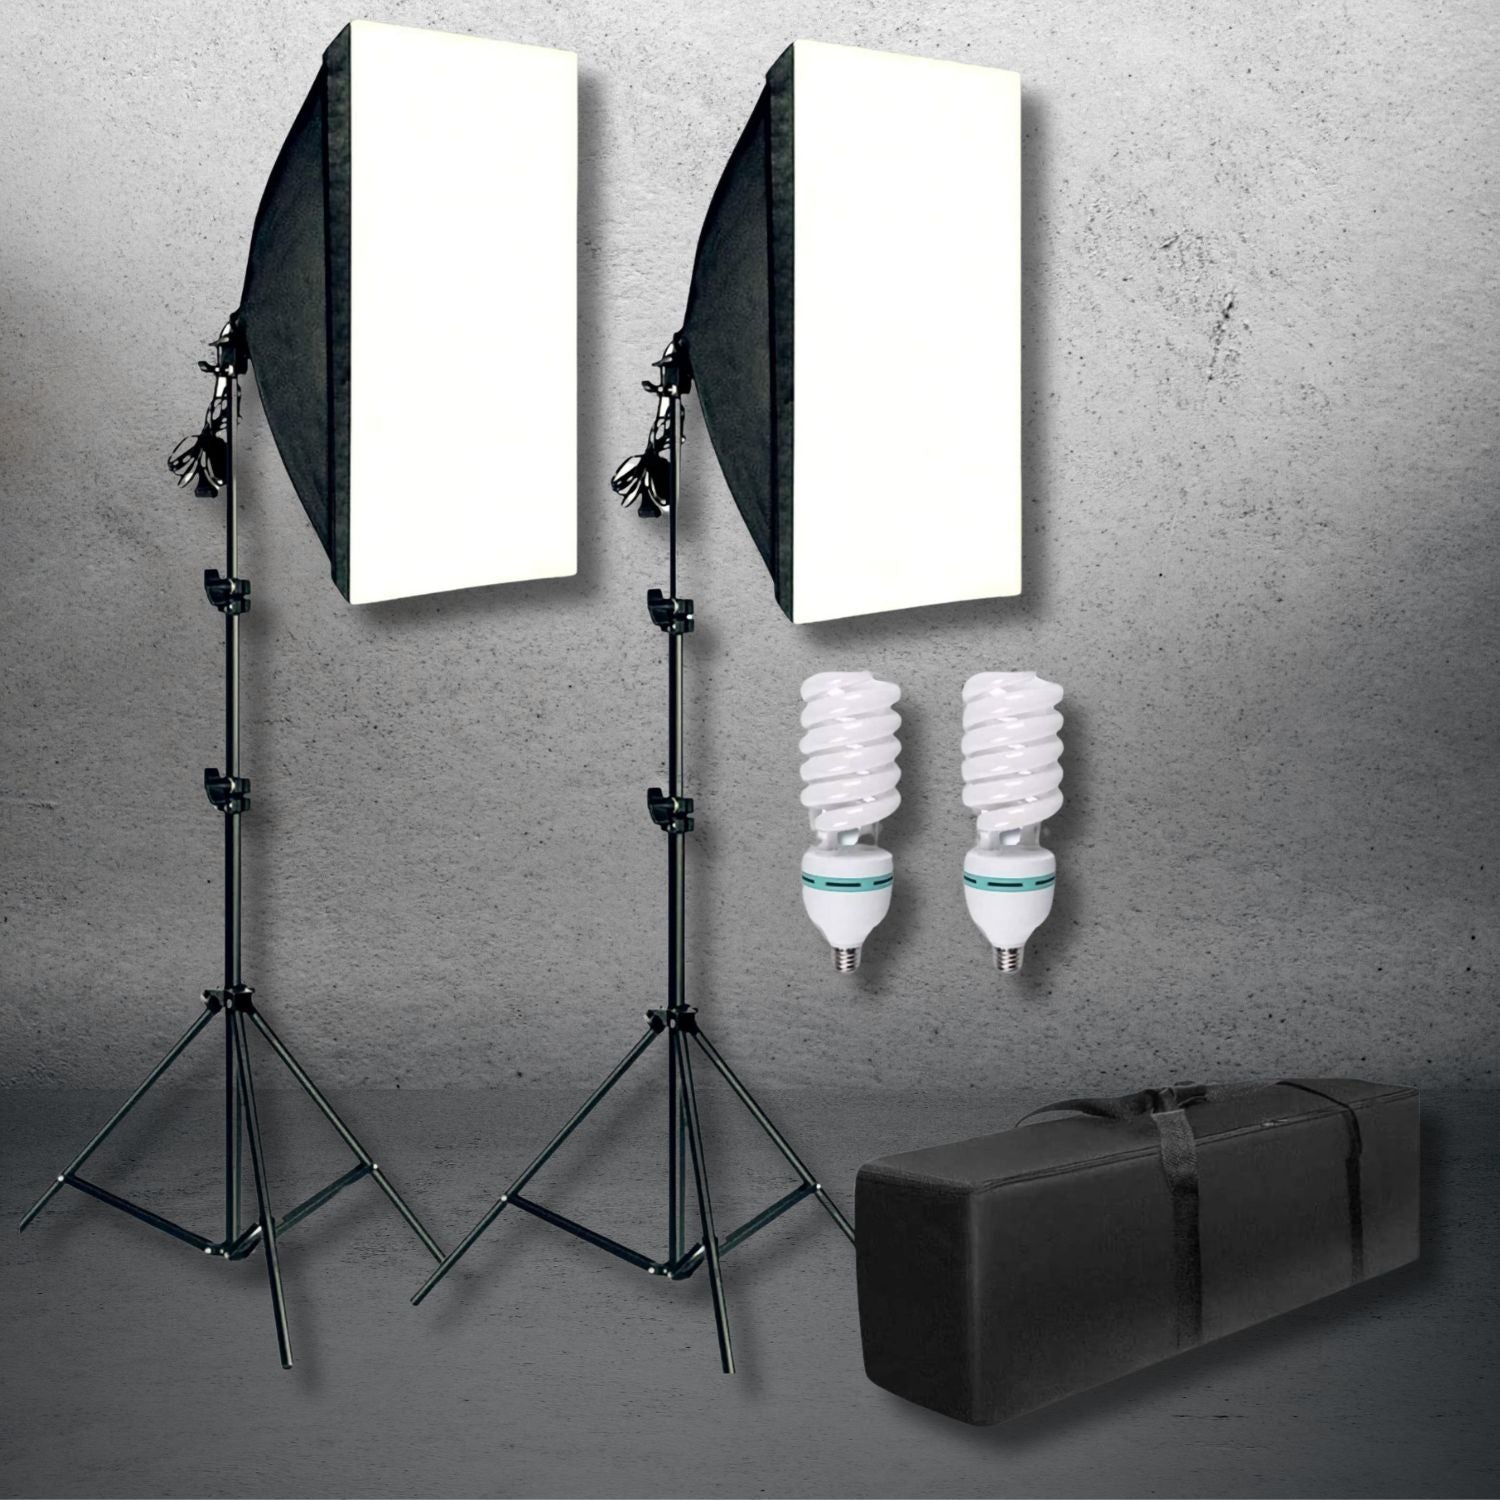 ProFlex Studio Lighting Kit: Softbox & Umbrella Combo for Professional Photography - mylensball.com.au